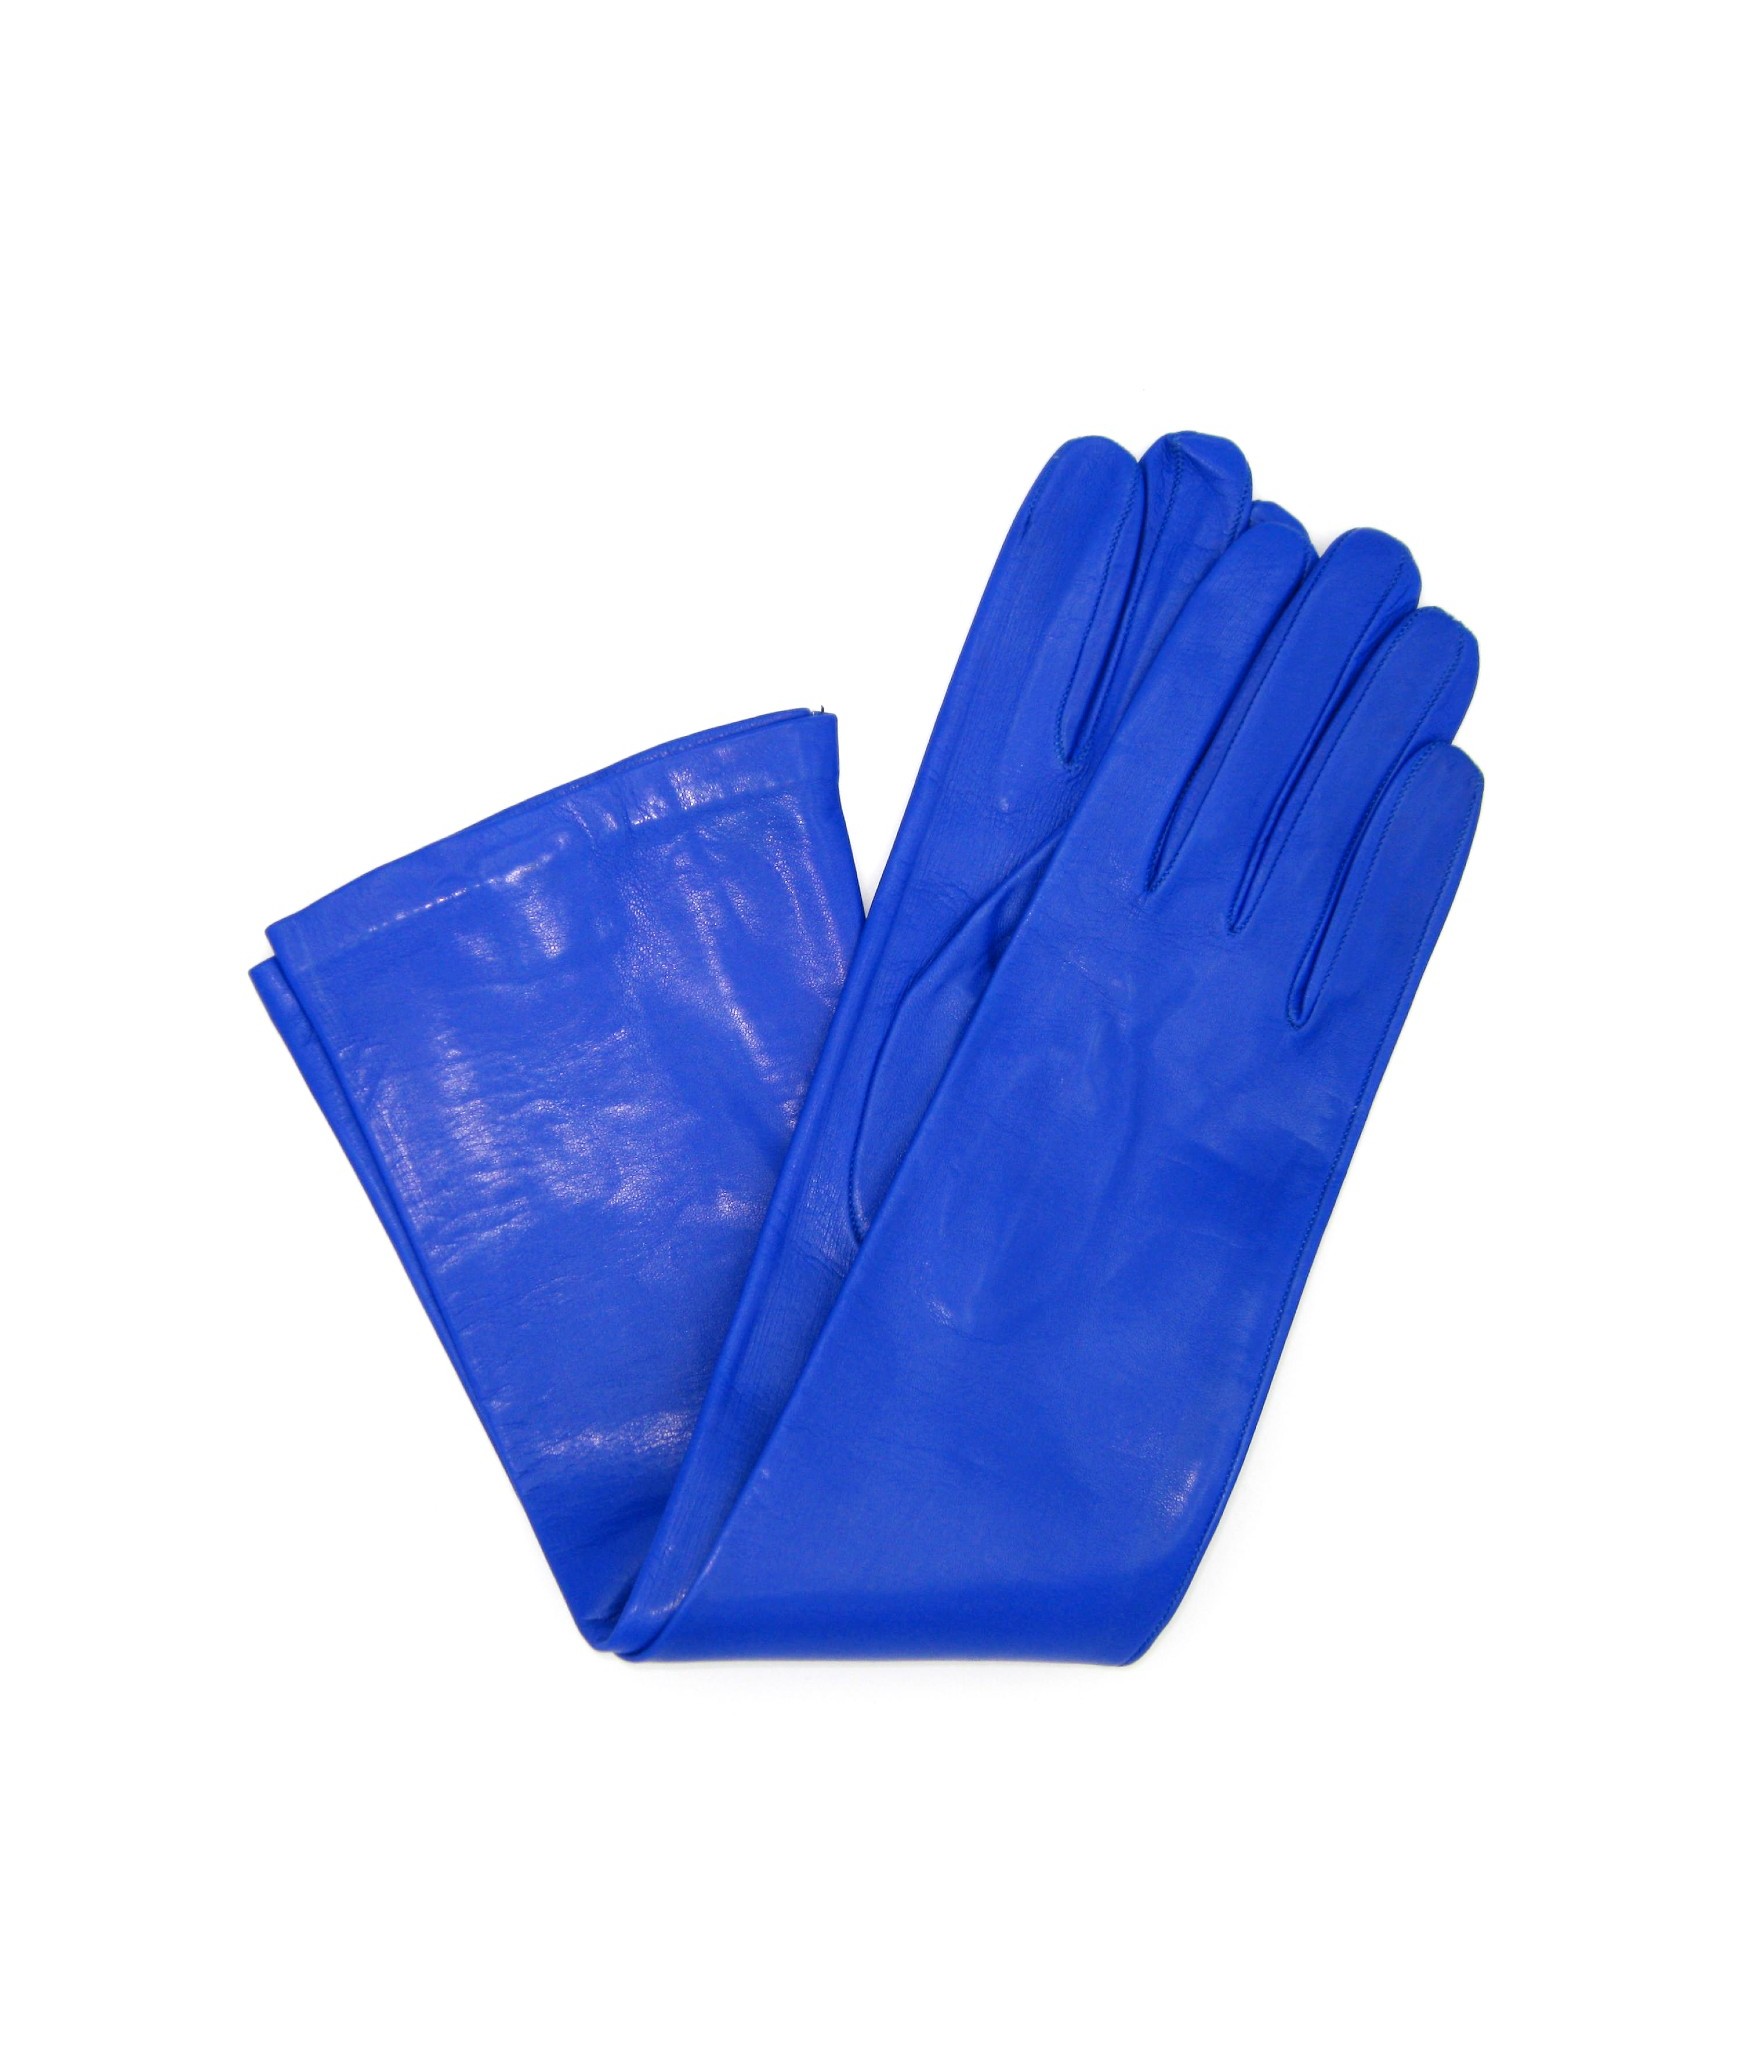 Nappa leather gloves 10bt silk lined Royal Sermoneta Gloves